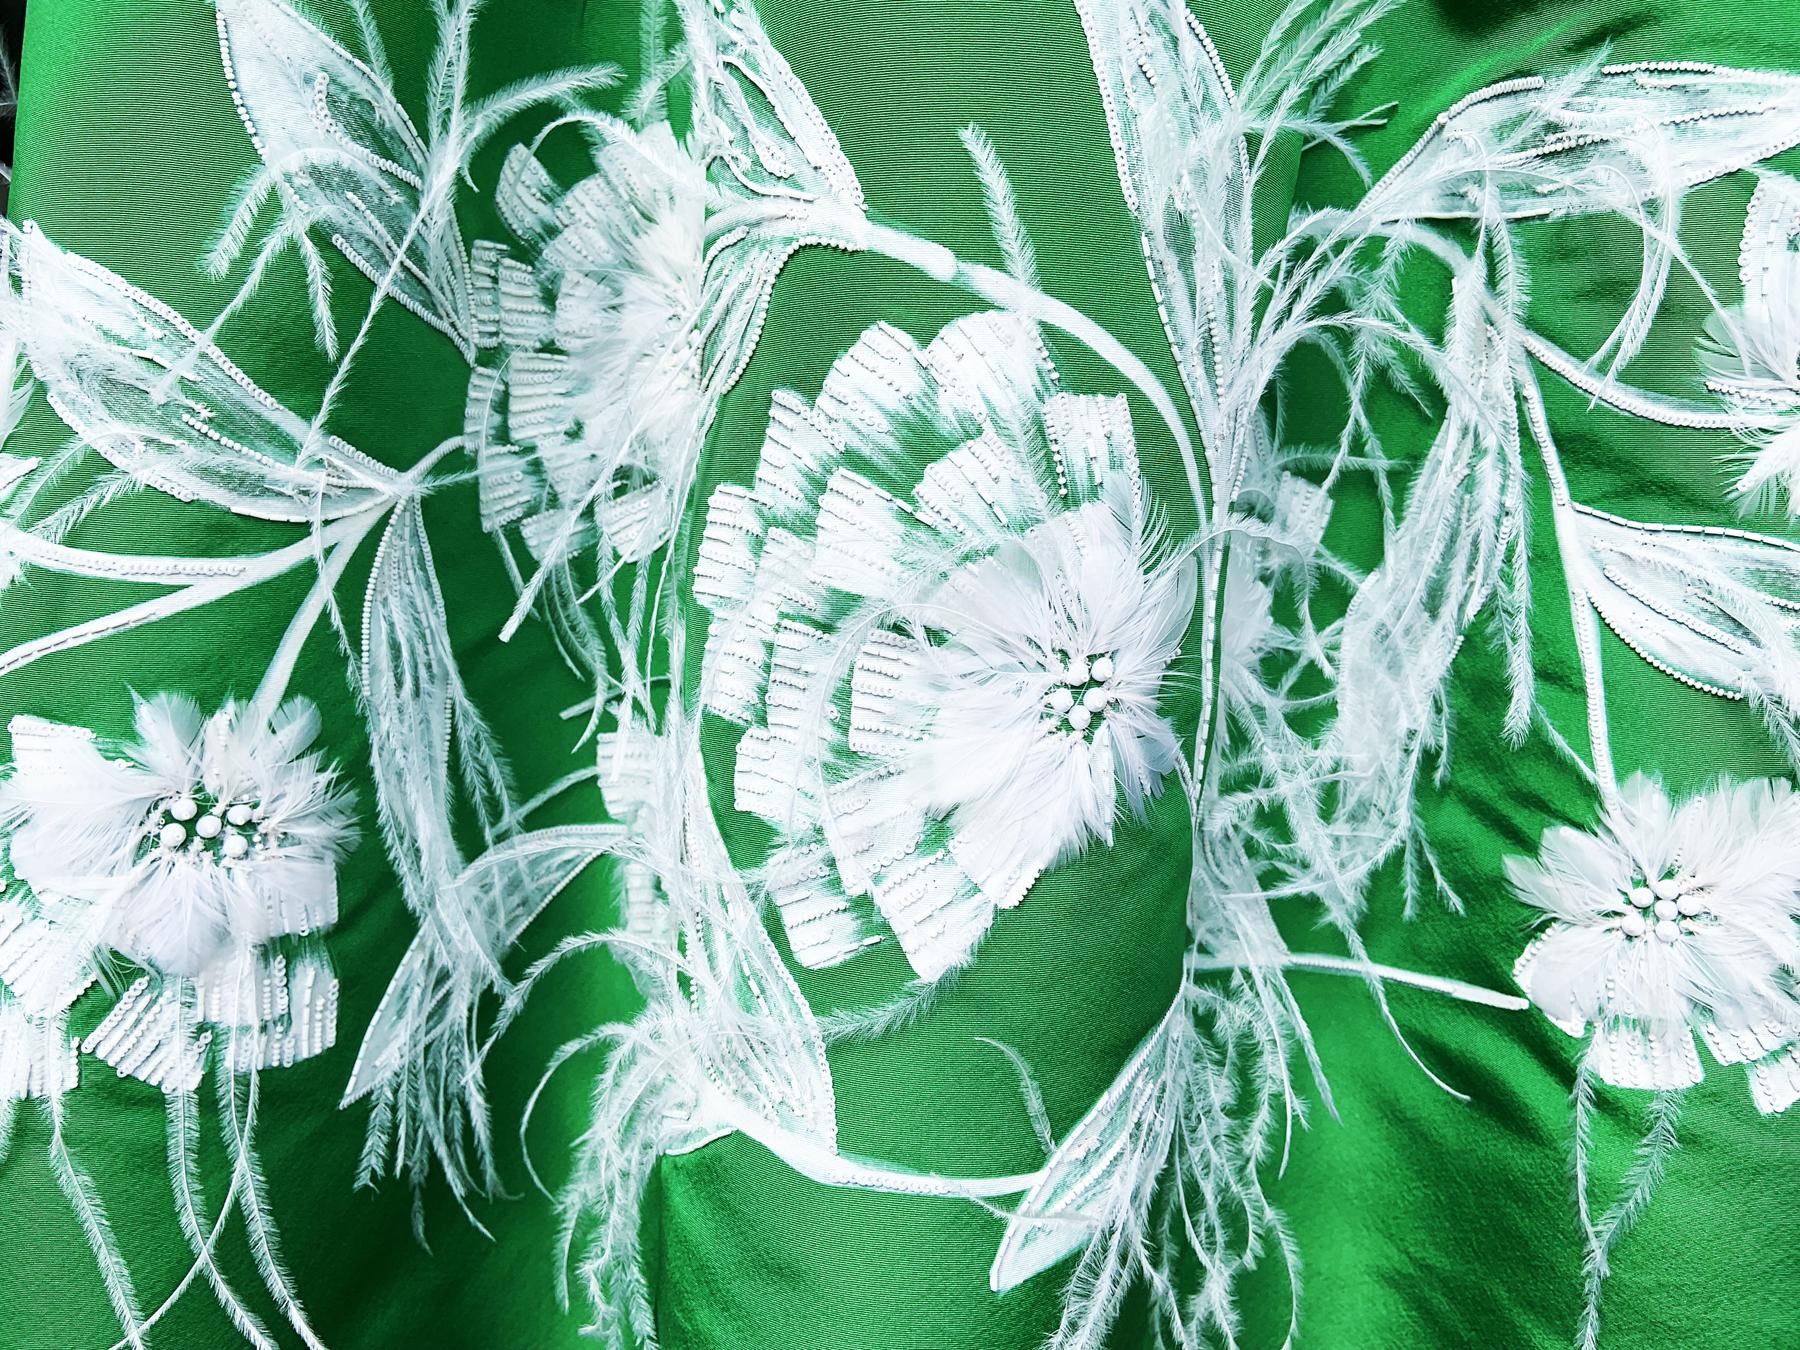 NWT Oscar de la Renta $5490 S/S 2015 Green Silk Taffeta Feather Beads Dress US 6 For Sale 3